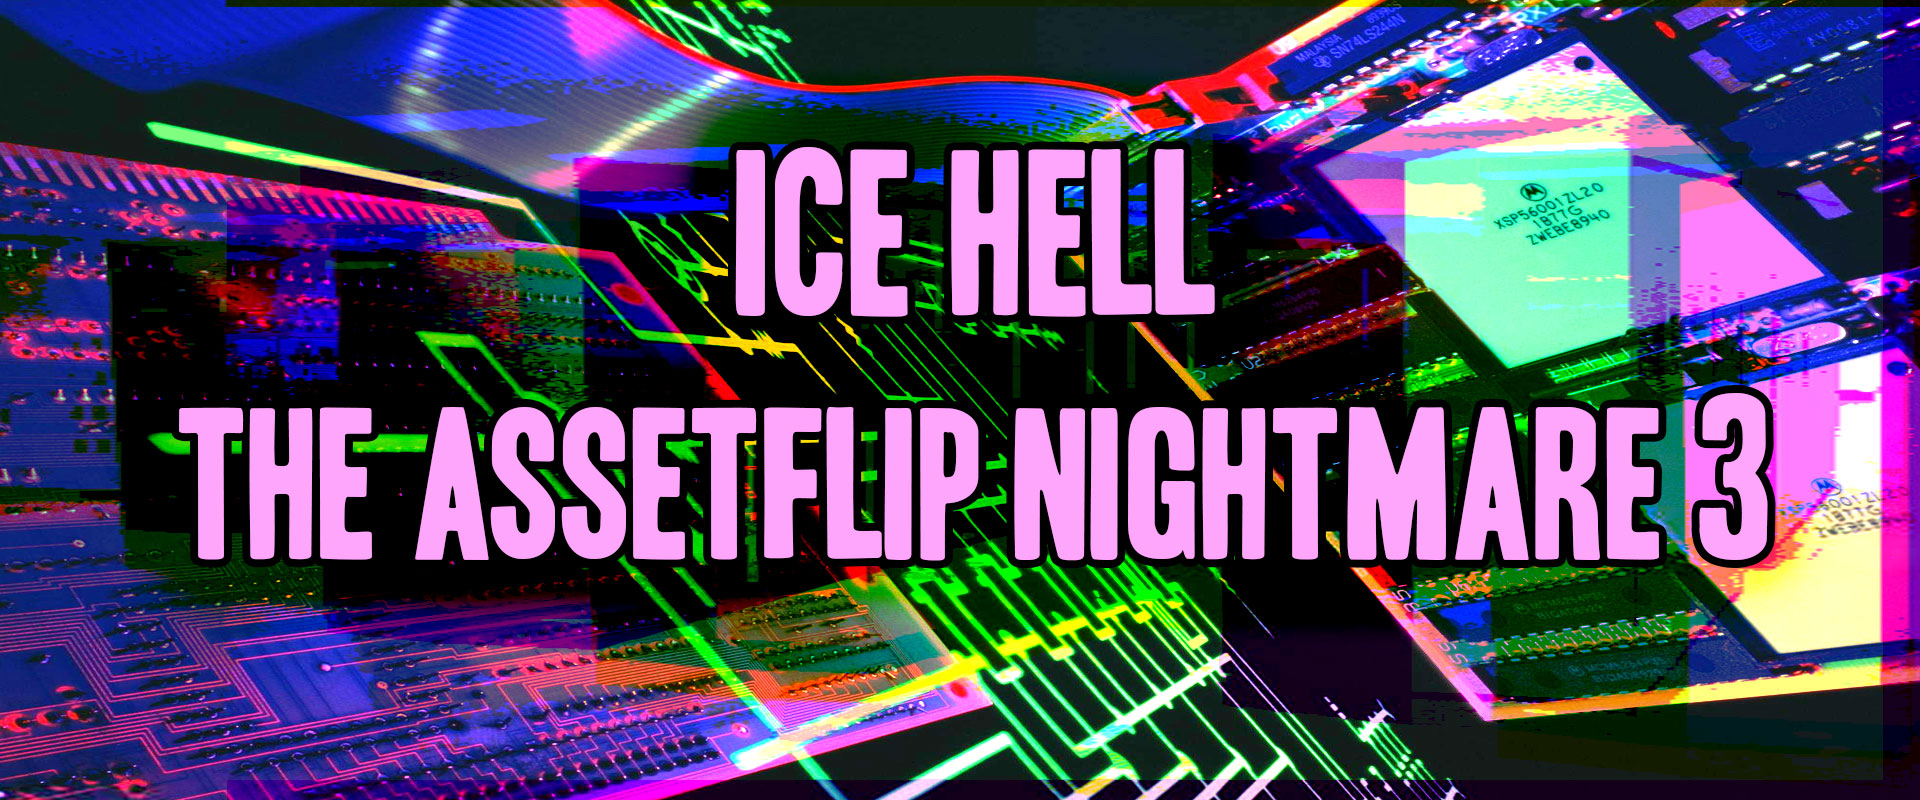 Ice Hell: The Asseflit Nightmare 3